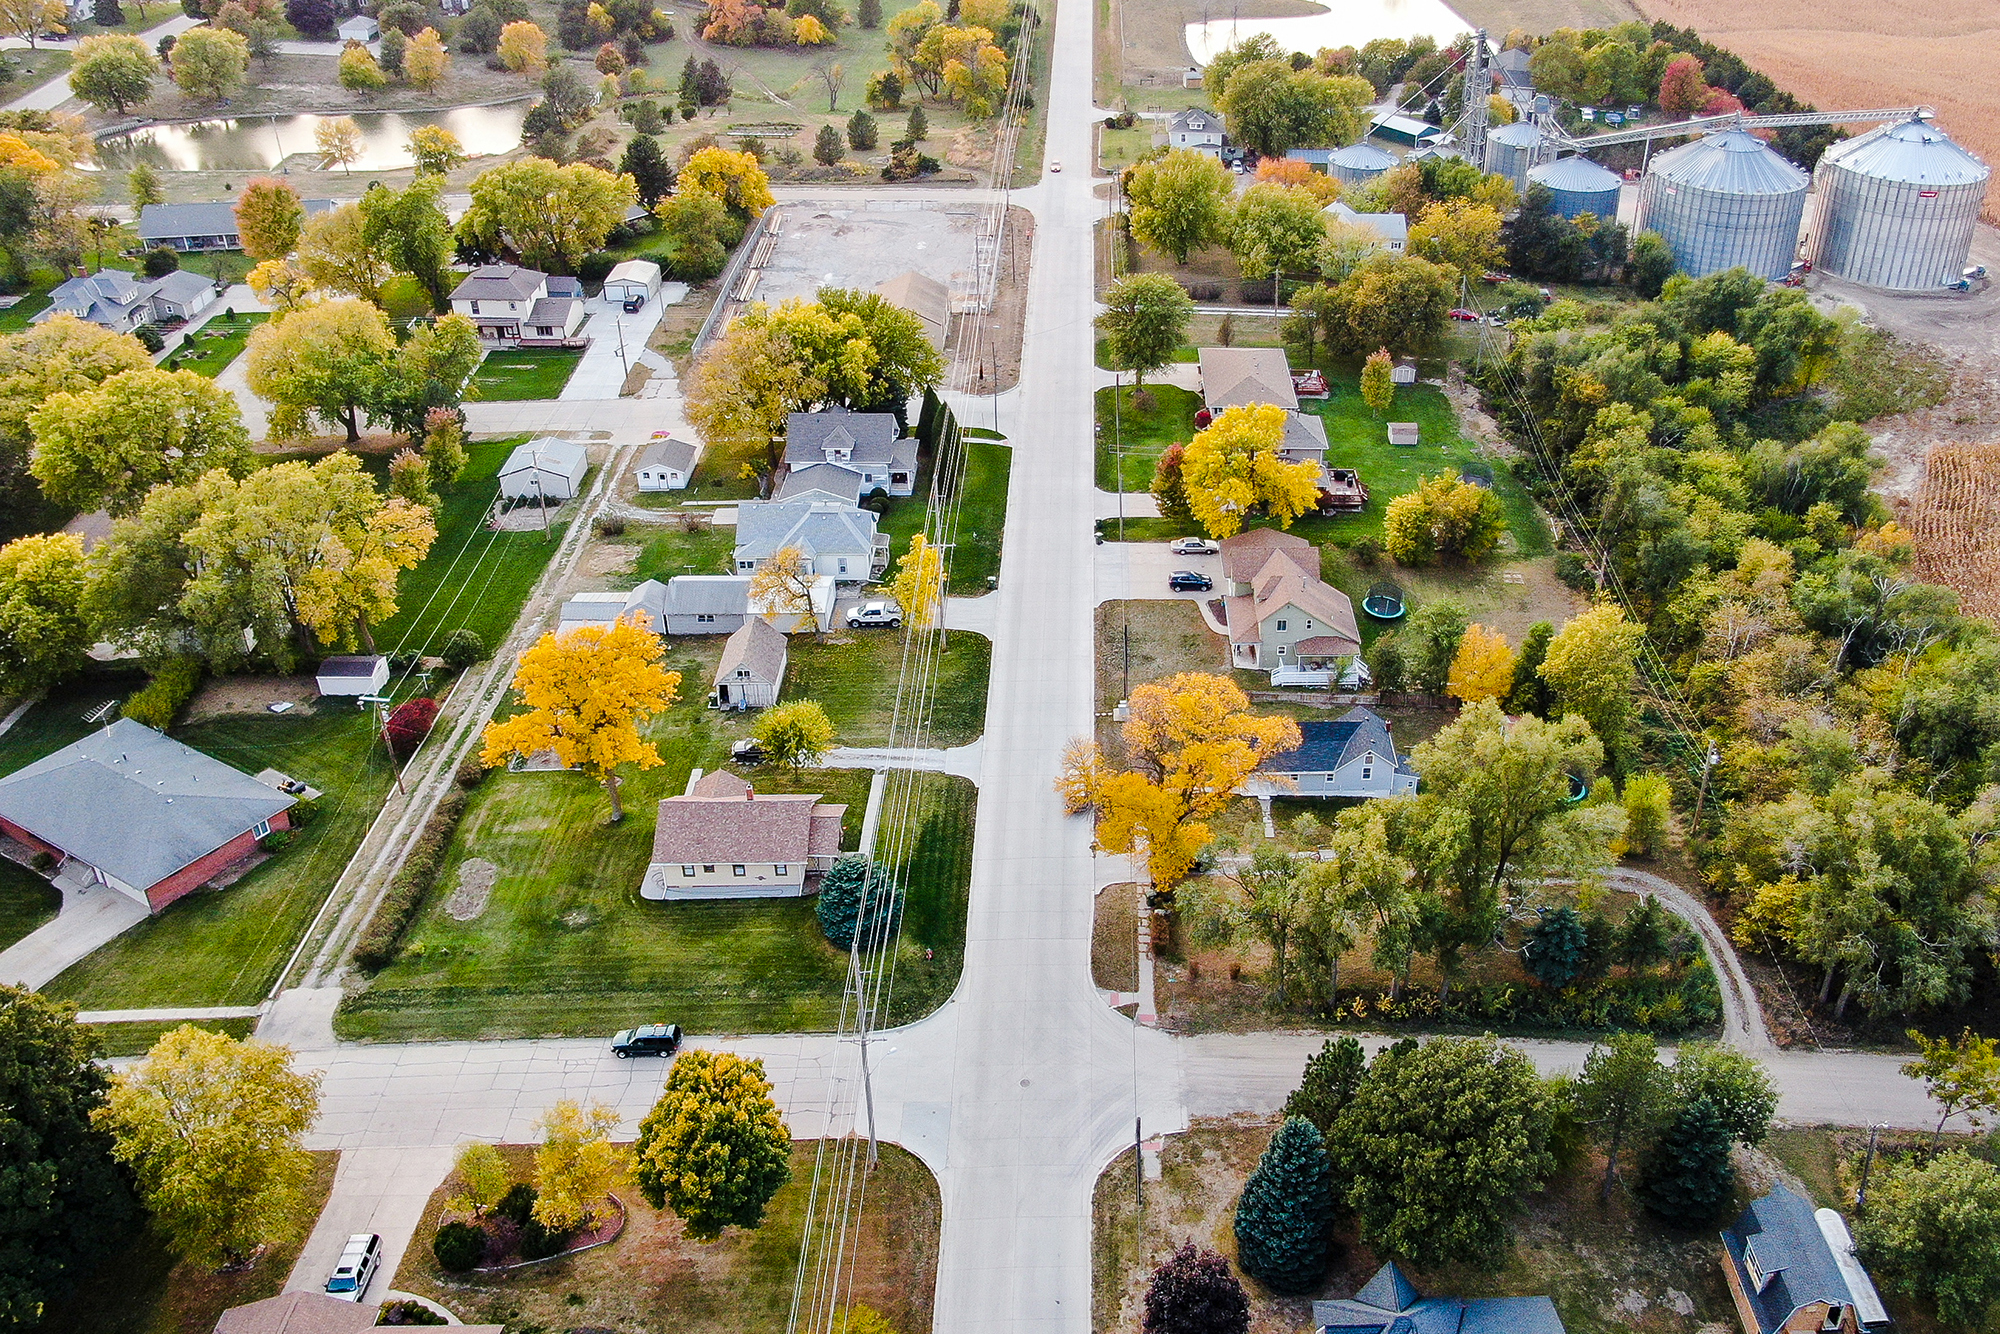 Aerial view of street